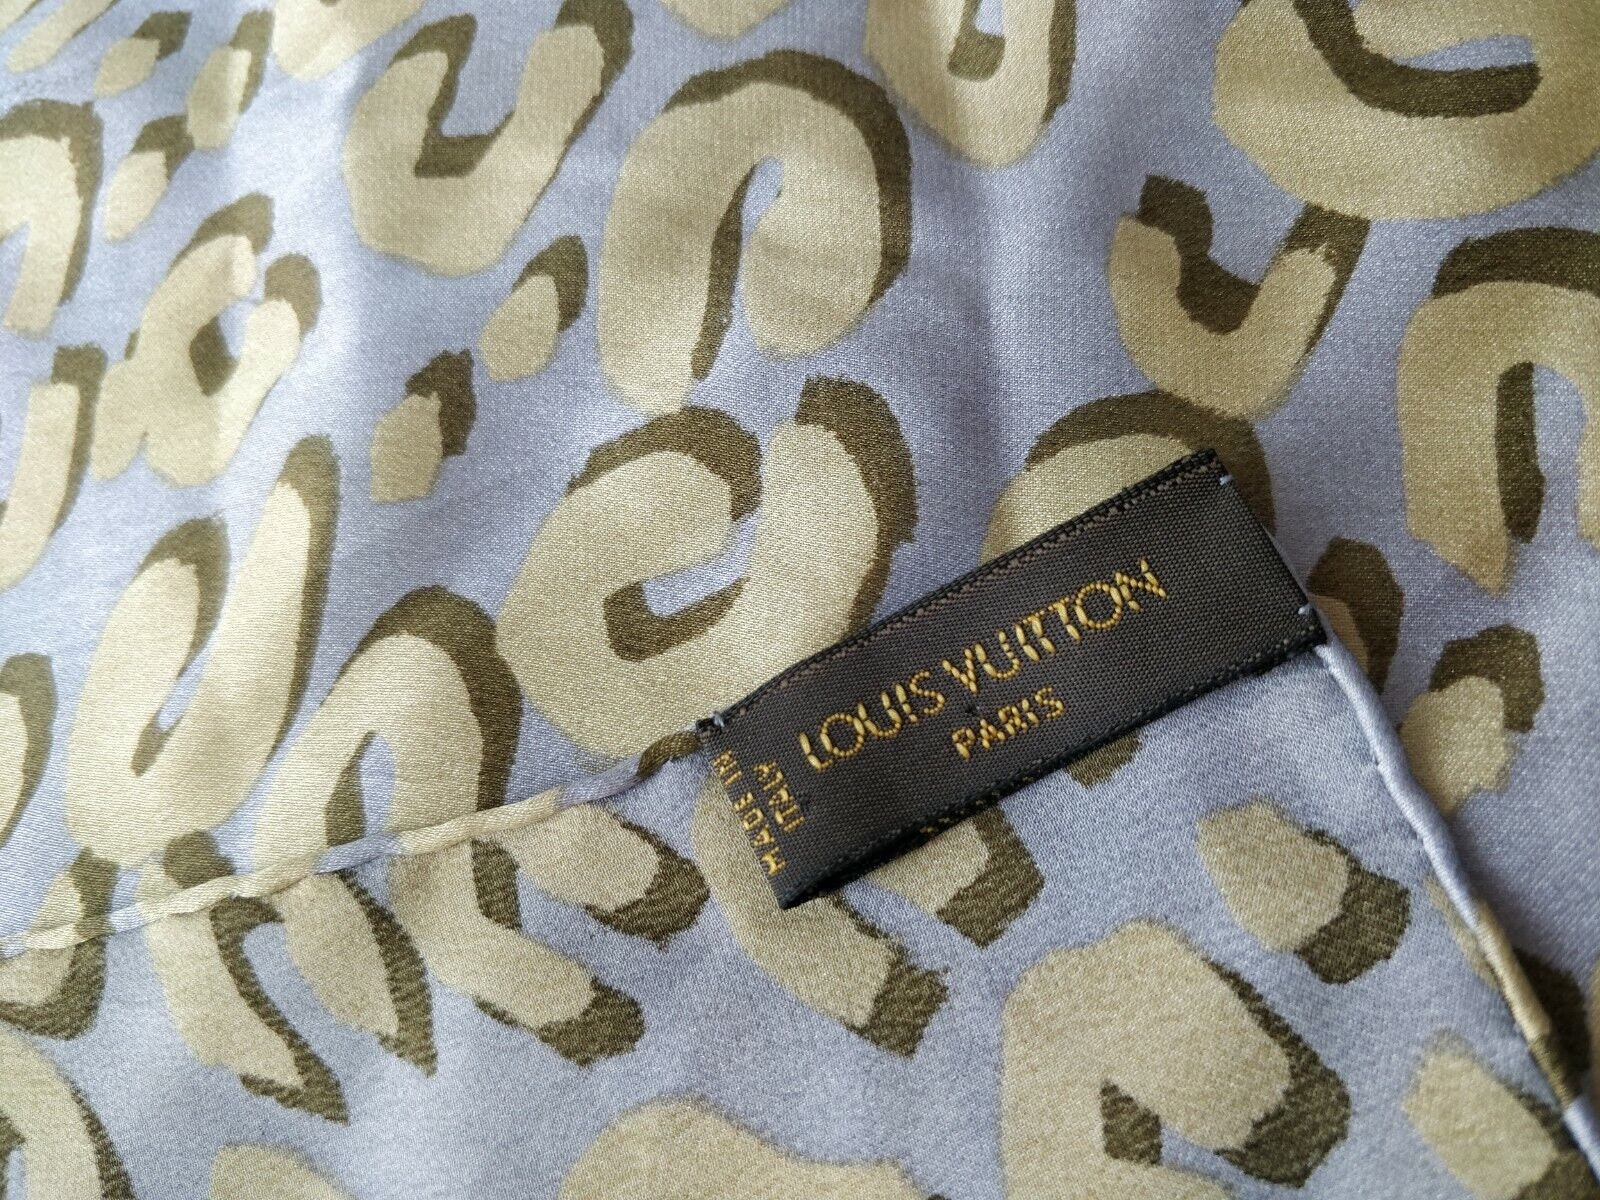 Louis Vuitton Stephen Sprouse AW06 Leopard Print Silk Scarf Grey